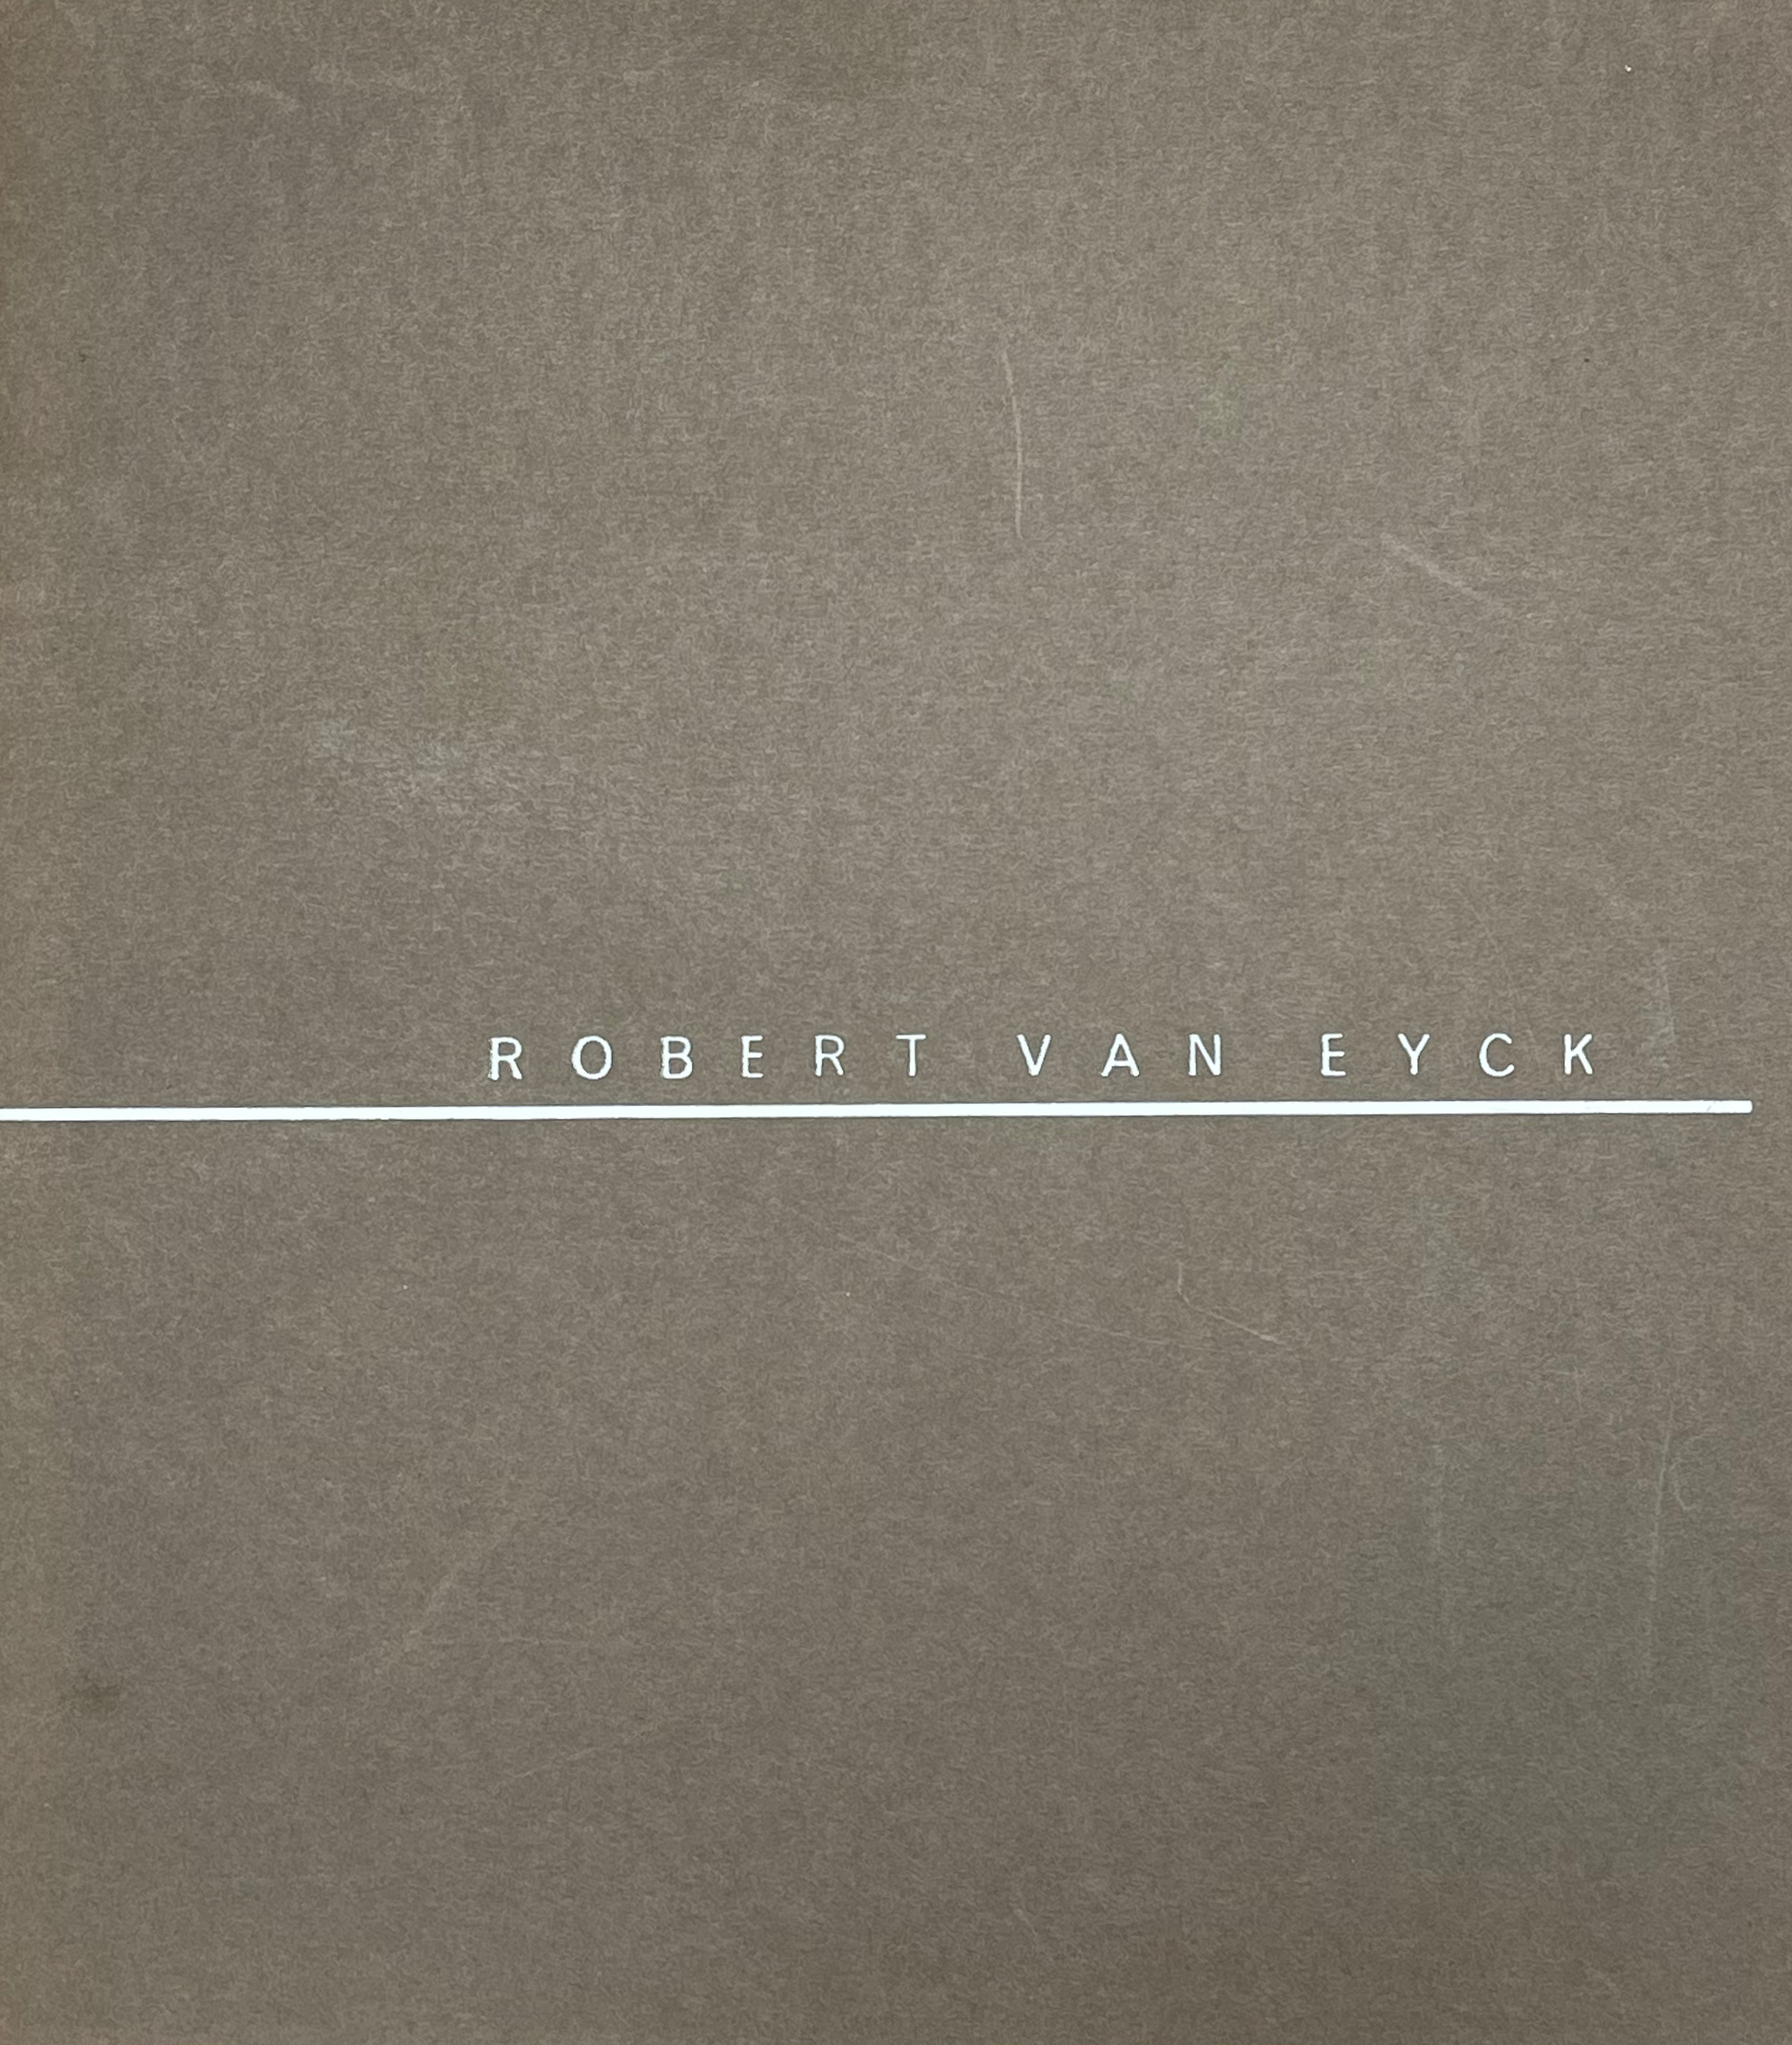 Brook Street Gallery catalogue from van Eyck’s solo exhibition